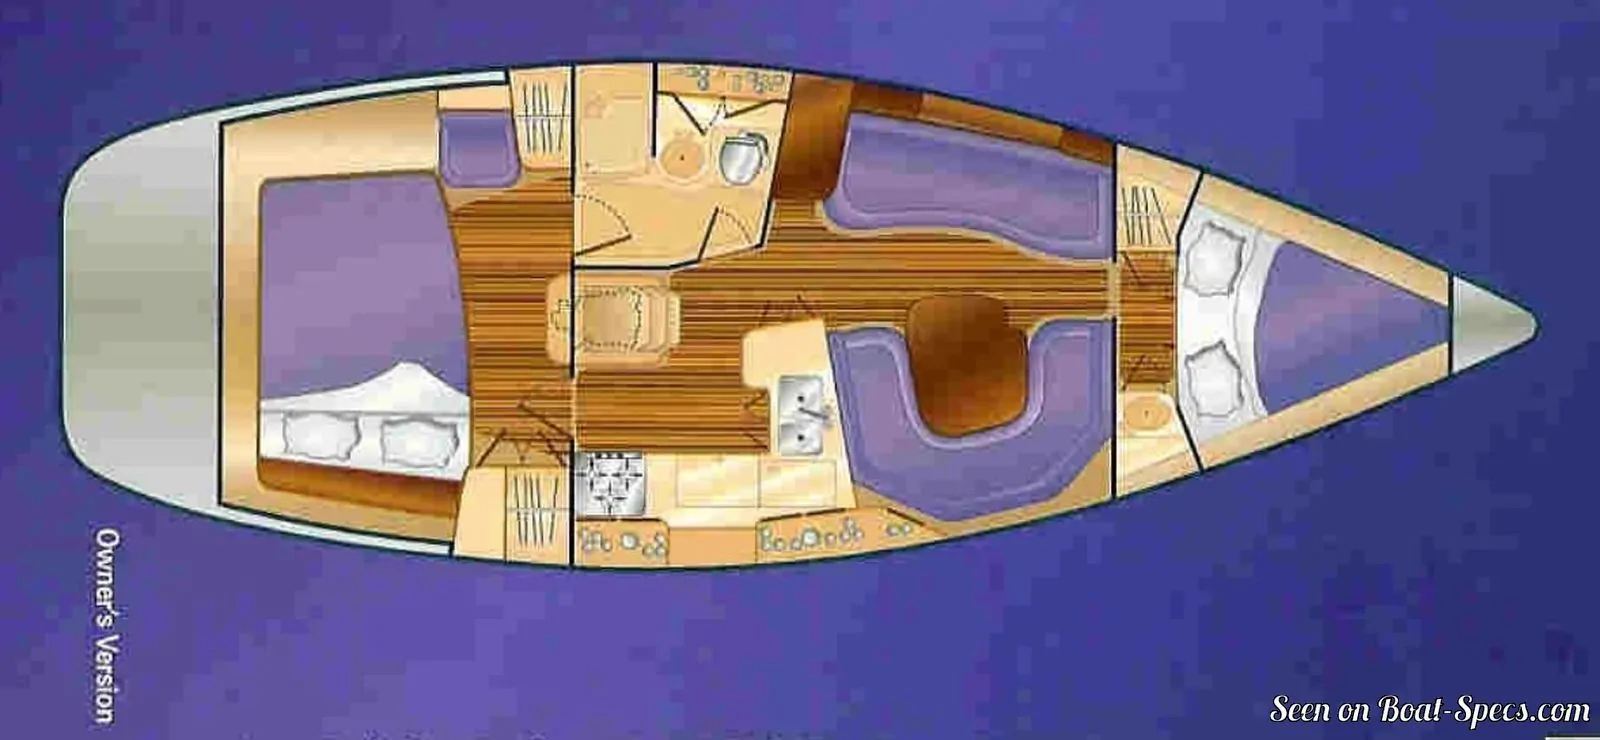 Hunter 380 Shoal Draft Marlow Hunter Sailboat Specifications Boat Specs Com